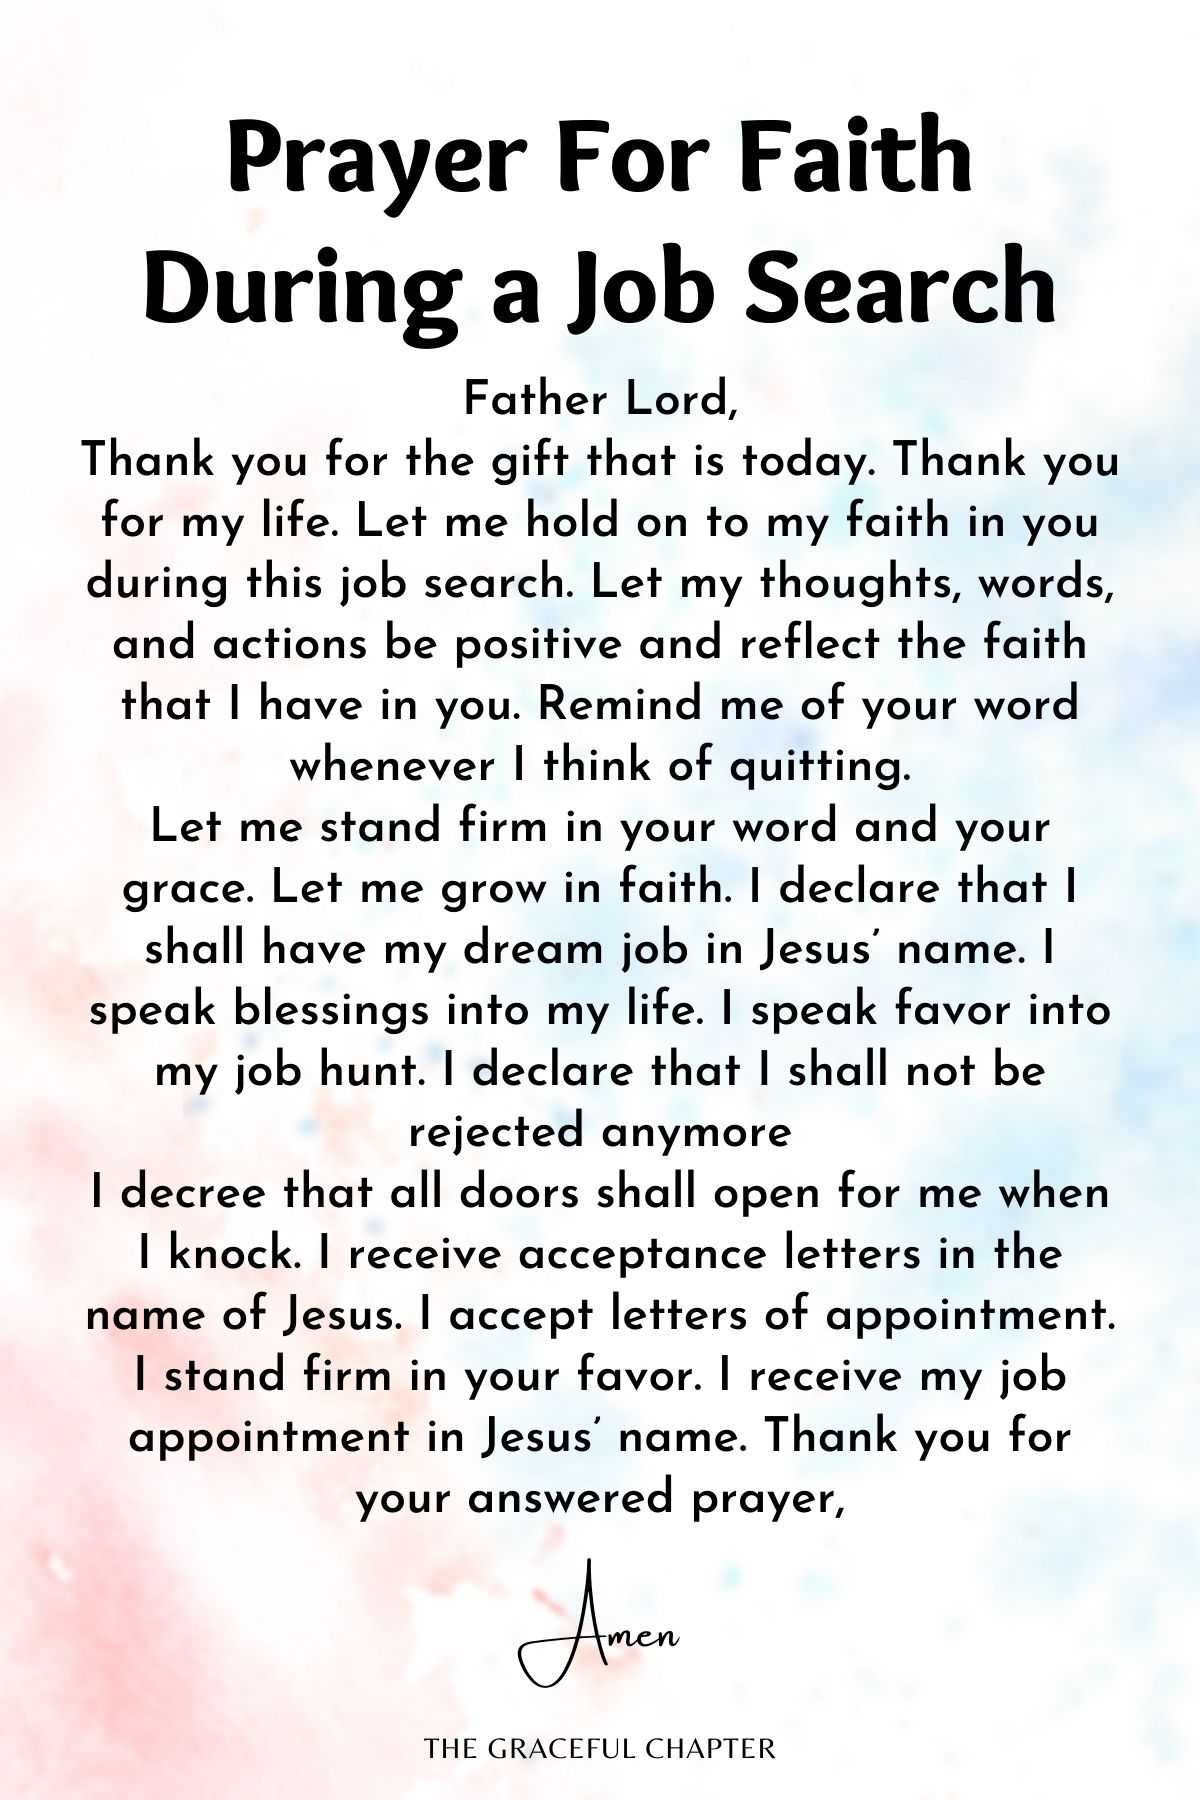 Prayer for Faith During a Job Search